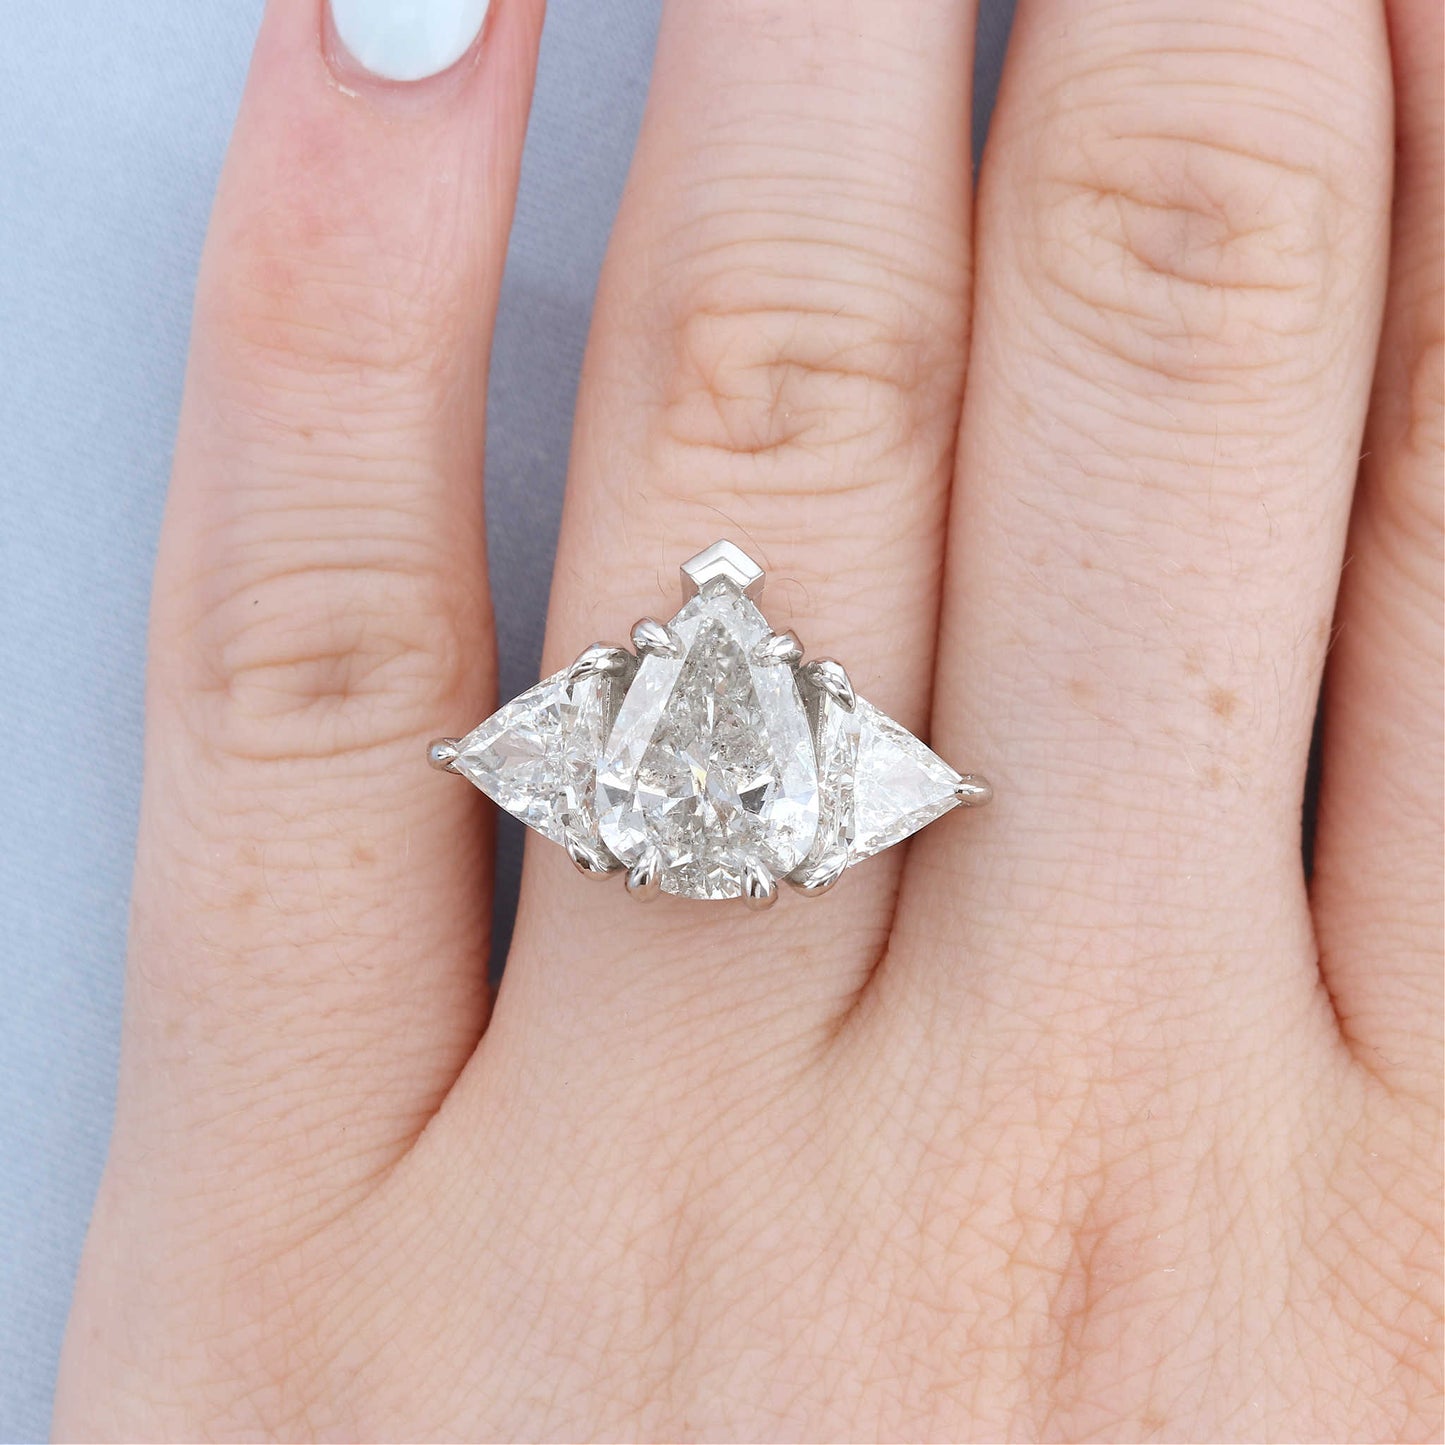 Platinum Three Stone Pear Diamond Engagement Ring on a Finger